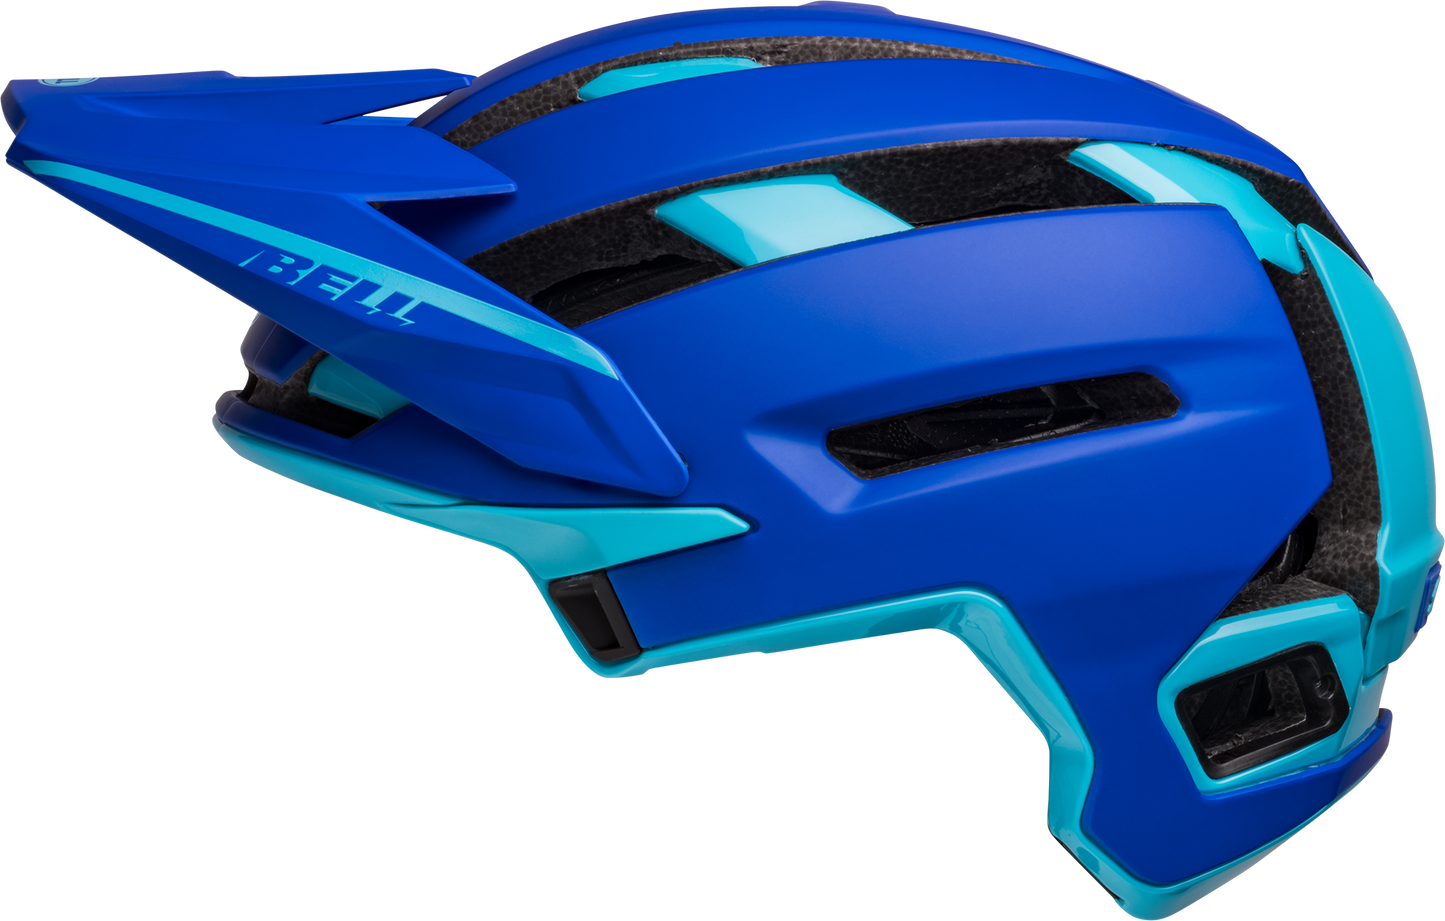 BELL SUPER AIR R SPHERICAL 全面頭盔/ BELL SUPER AIR R SPHERICAL Full Face Helmet